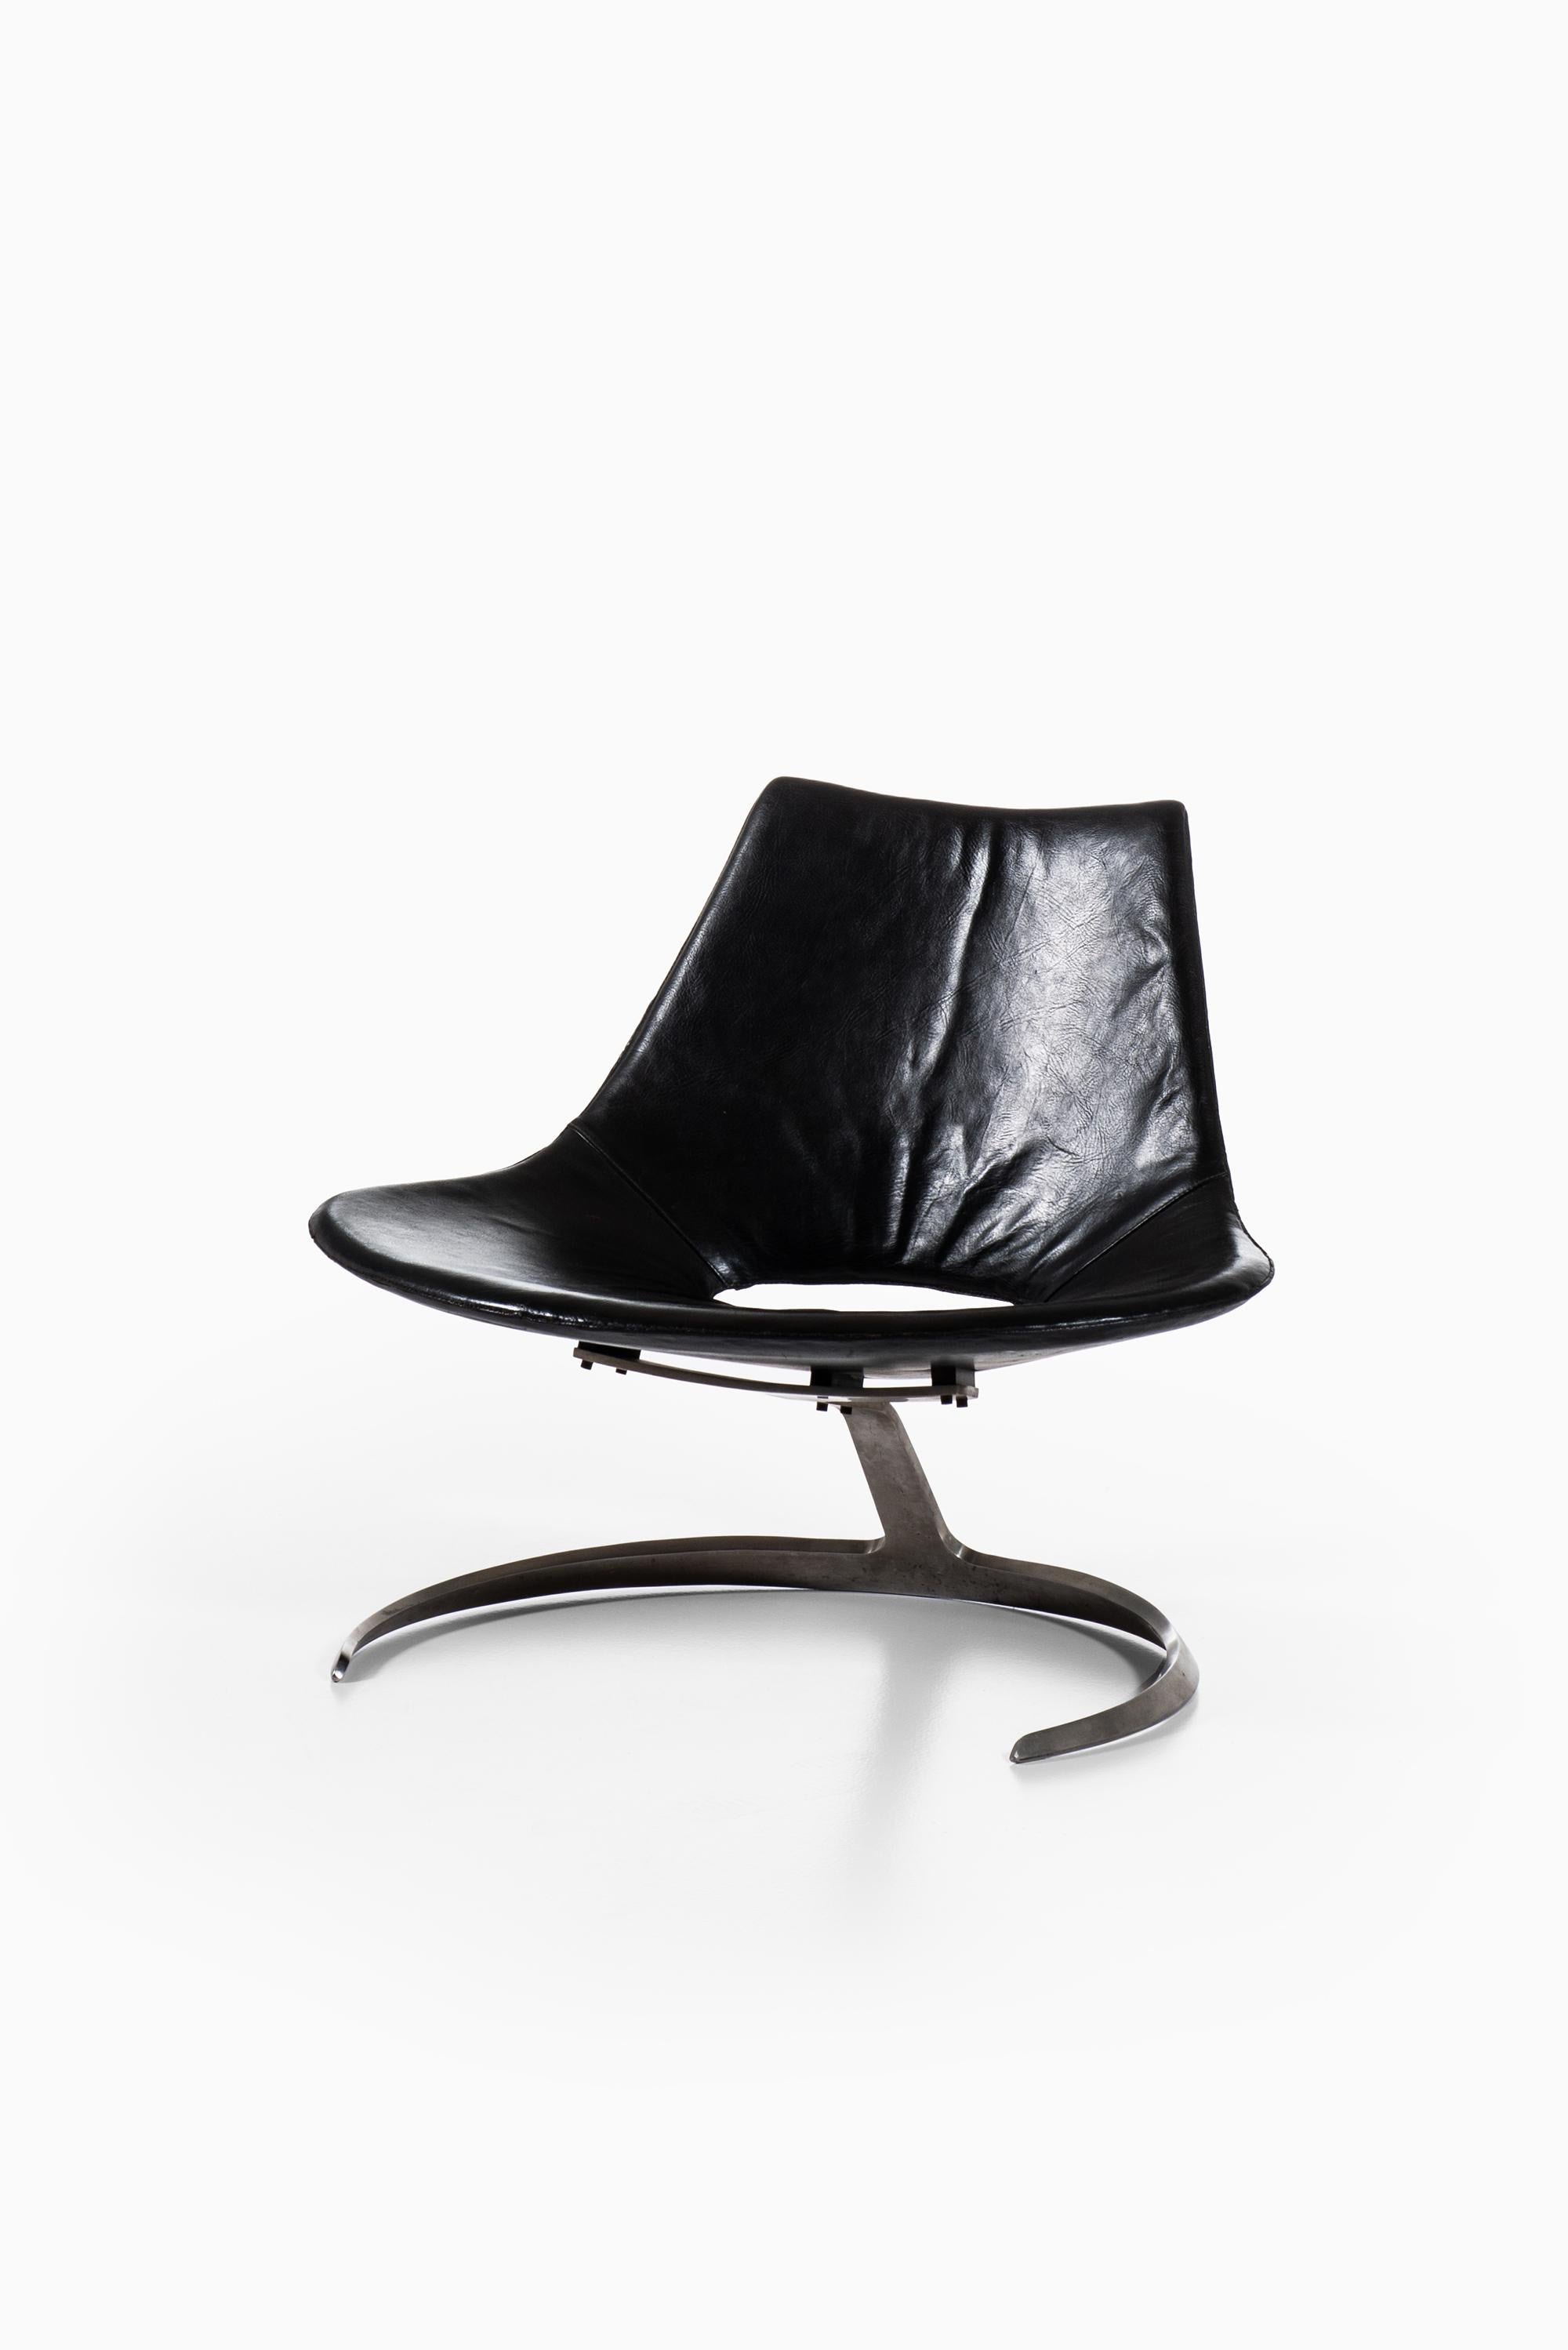 Rare easy chair model Scimitar designed by Preben Fabricius & Jørgen Kastholm. Produced by Ivan Schlecter in Denmark.